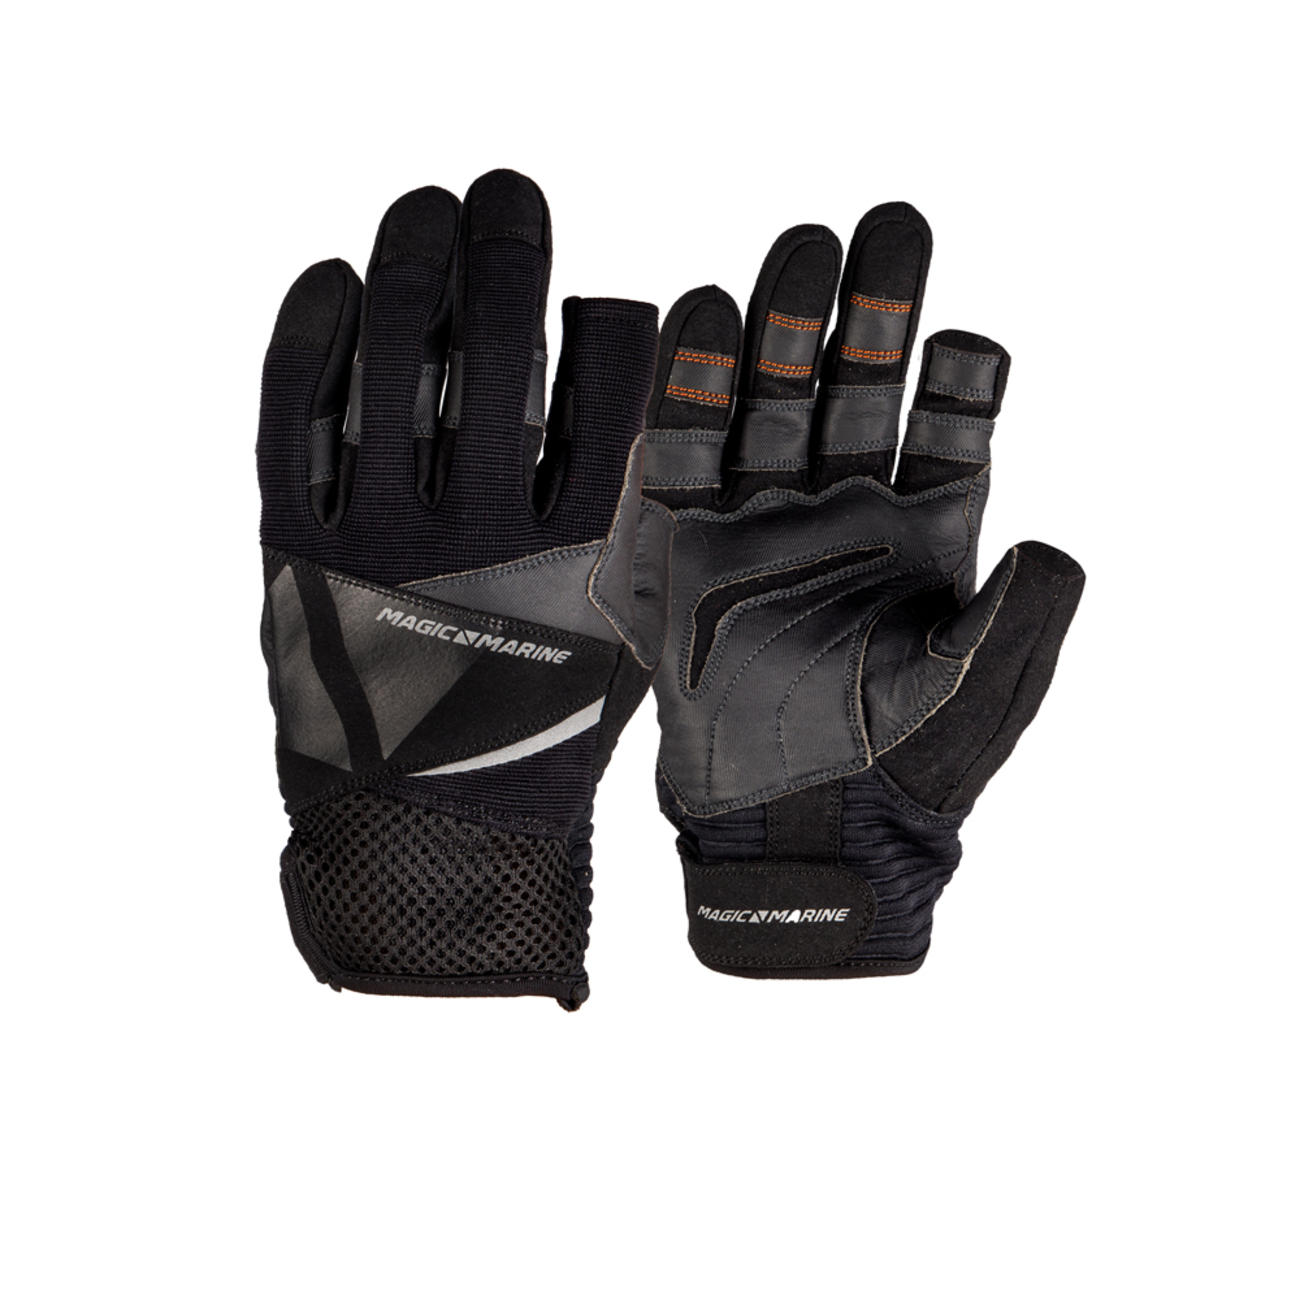 Ultimate 2 Gloves F/F レザーグローブ フルフィンガー